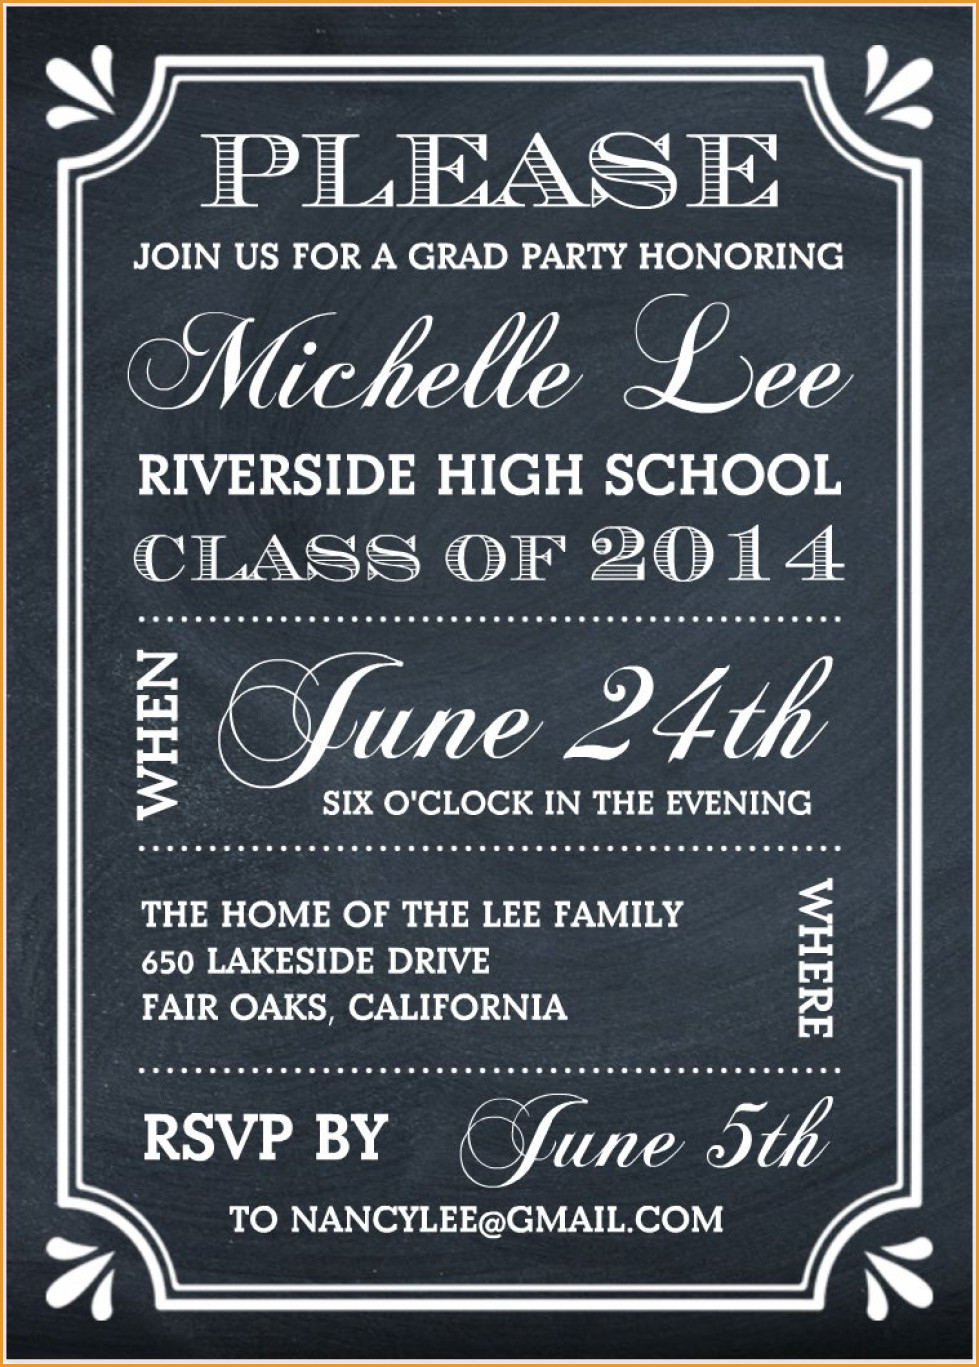 Party Invitations: Elegant Free Graduation Party Invitations Designs - Free Printable Graduation Party Invitations 2014